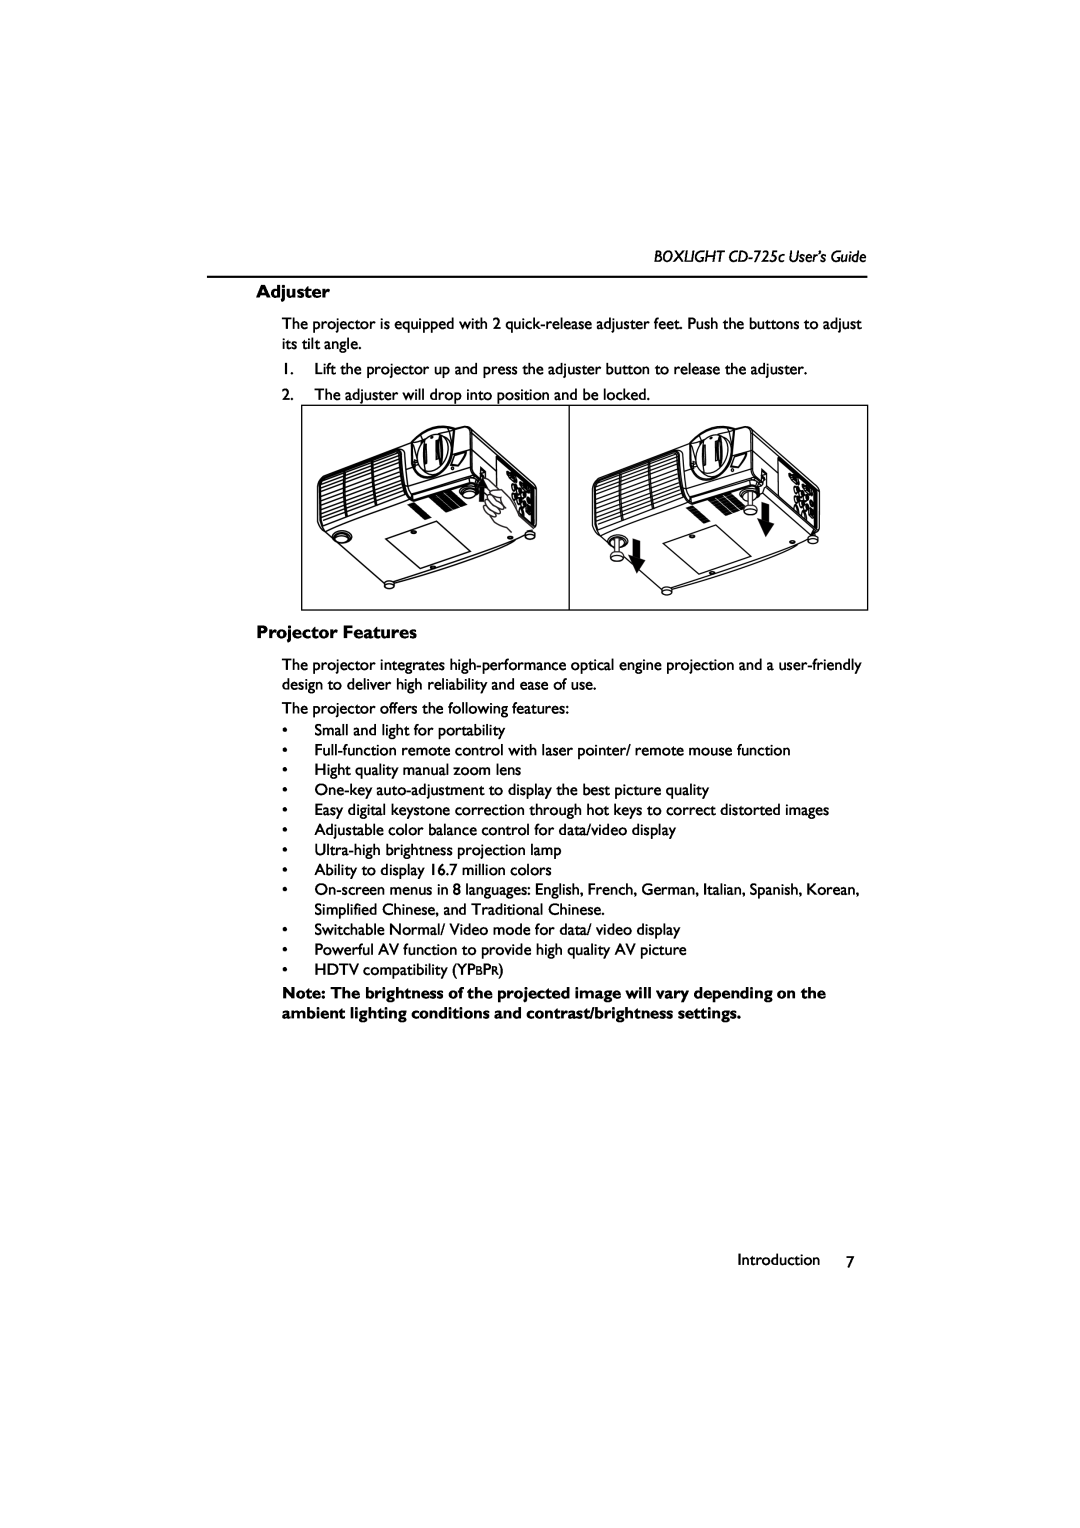 BOXLIGHT manual Adjuster, Projector Features, BOXLIGHT CD-725c User’s Guide 